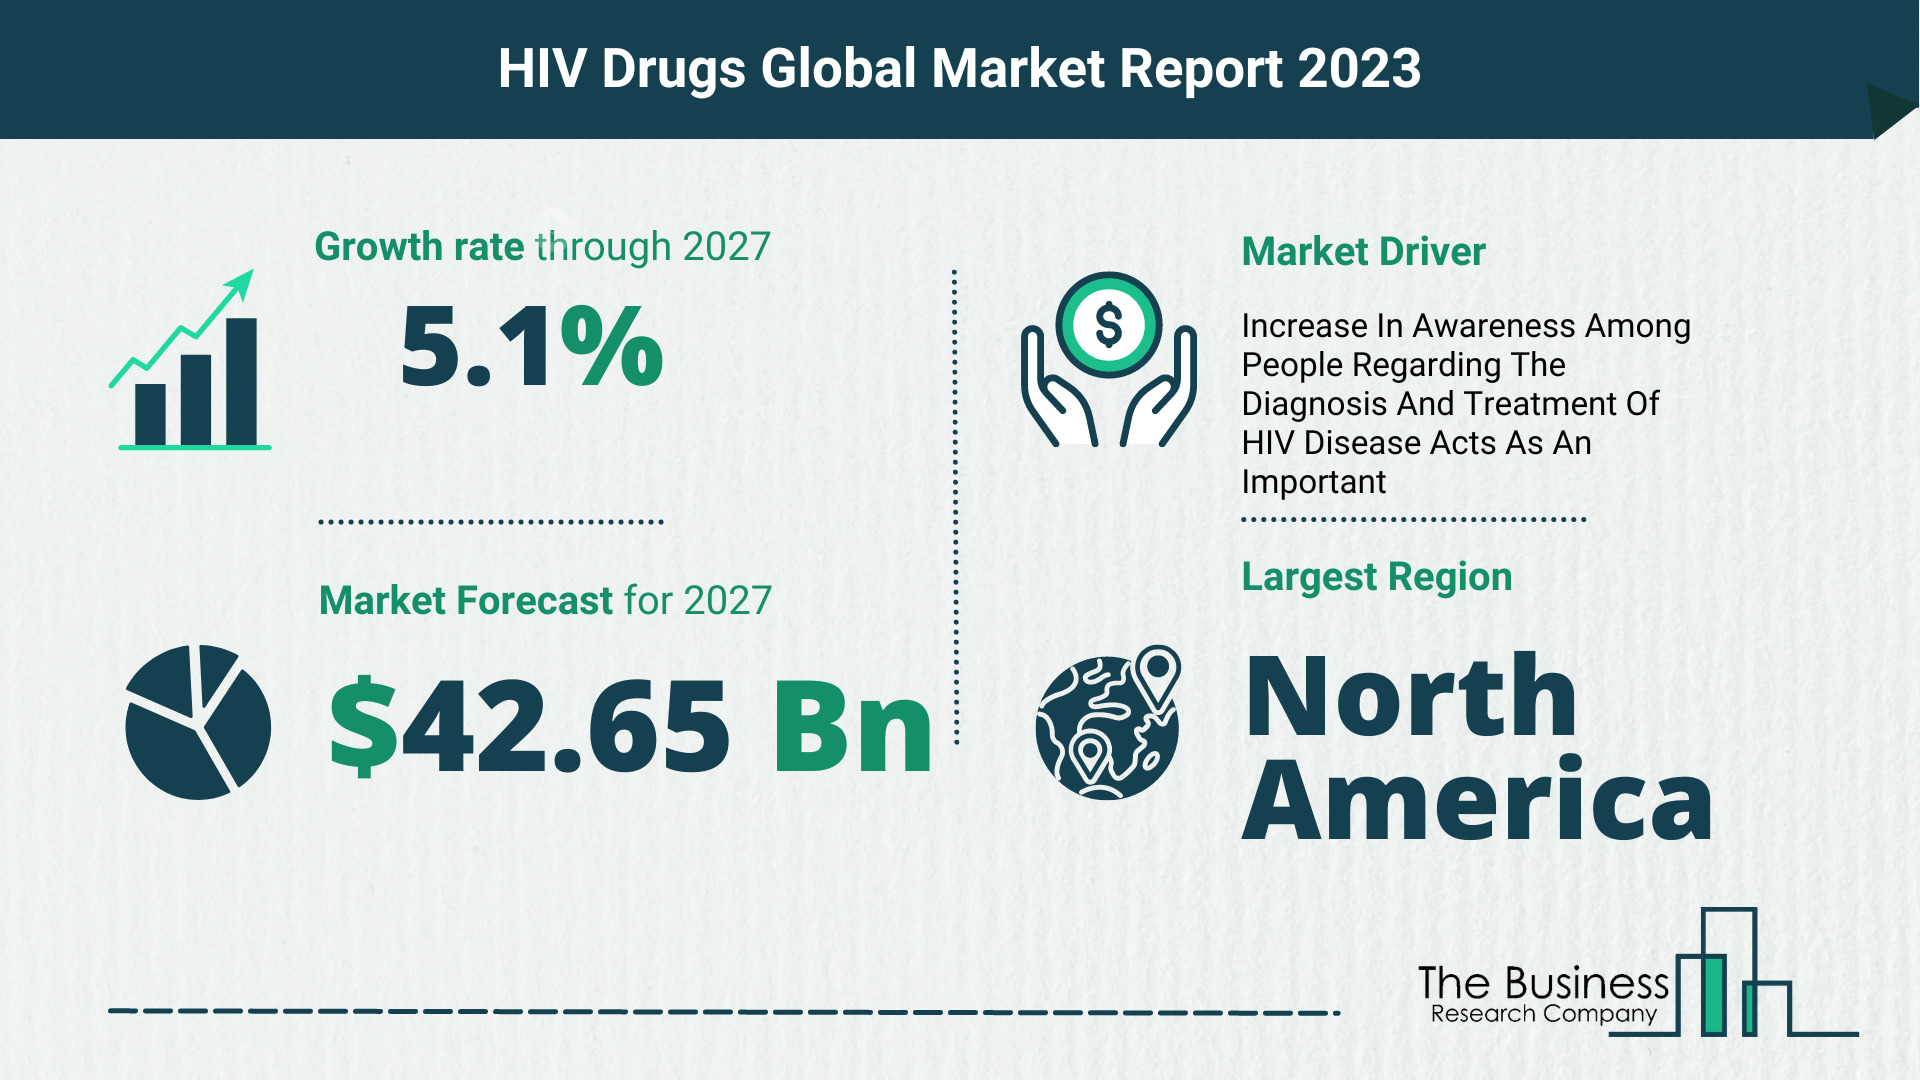 HIV drugs market